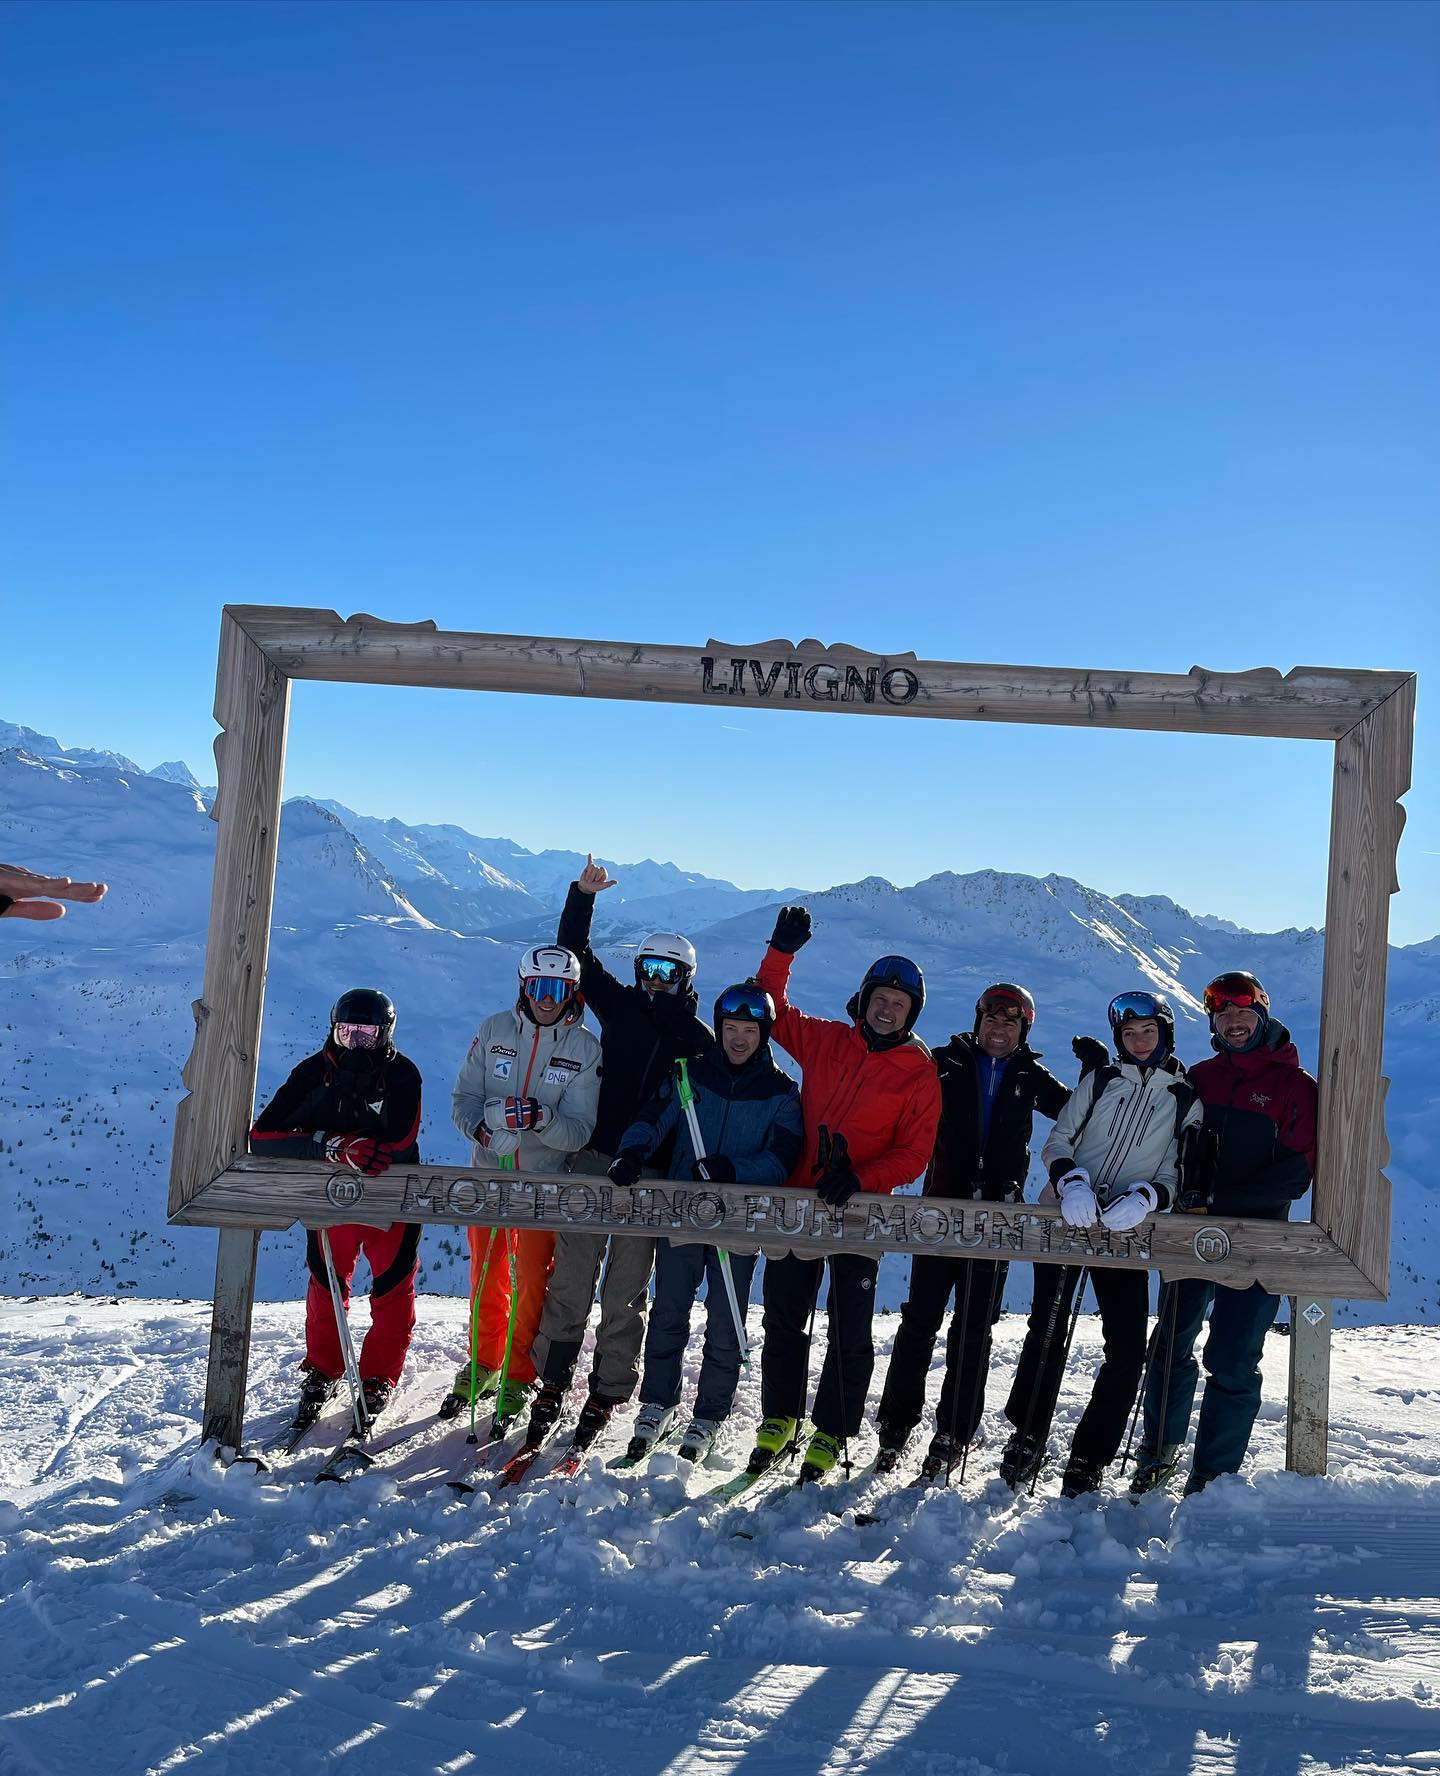 Училище по ски и сноуборд Flow Ski Academy